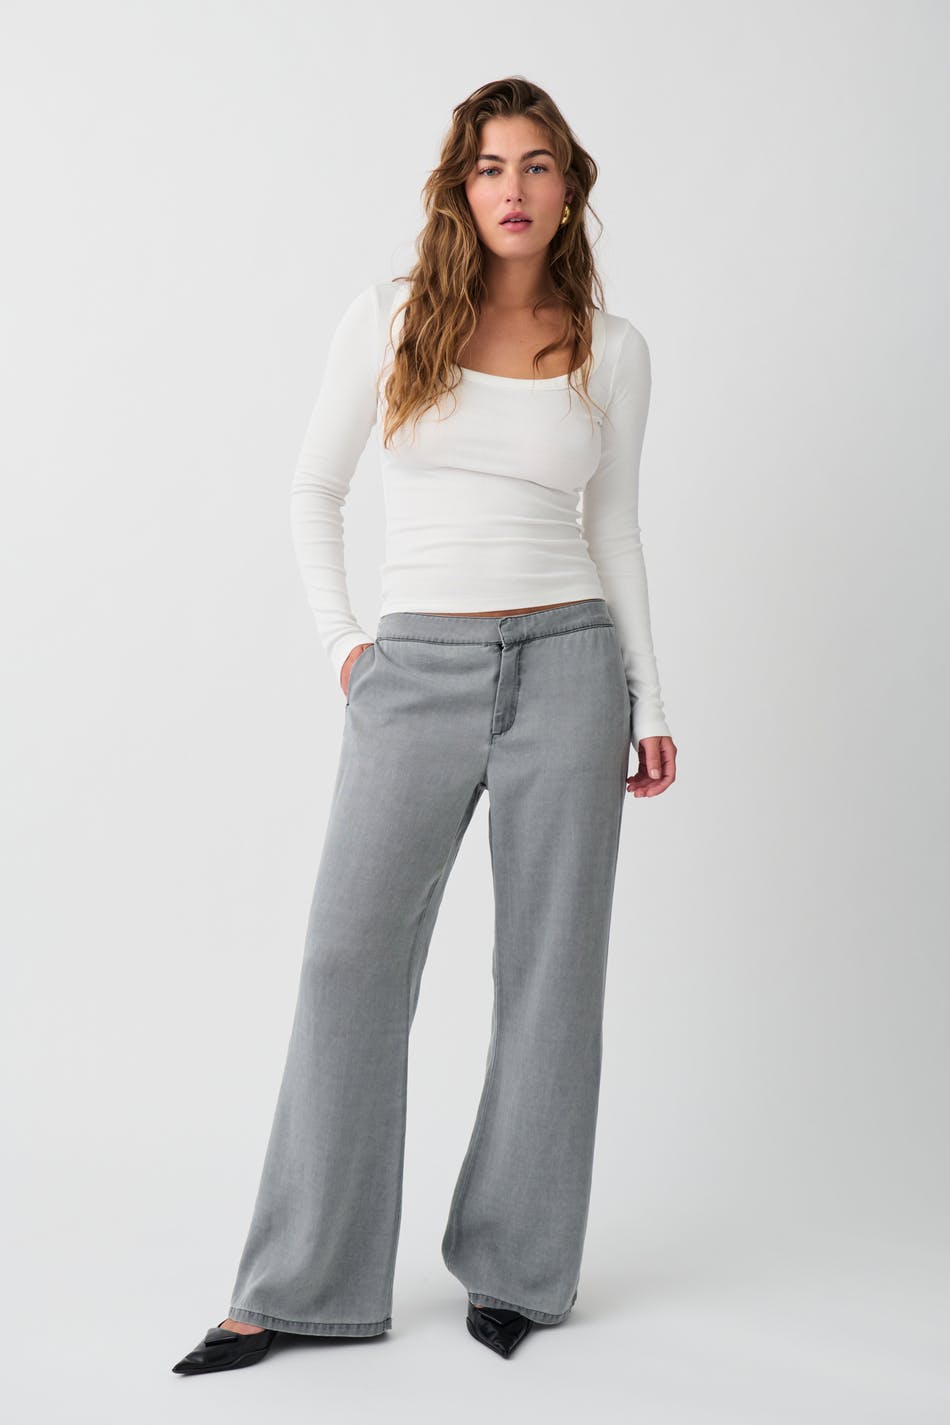 Gina Tricot - Fluid flare trousers - Utsvängda byxor - Grey - 42 - Female